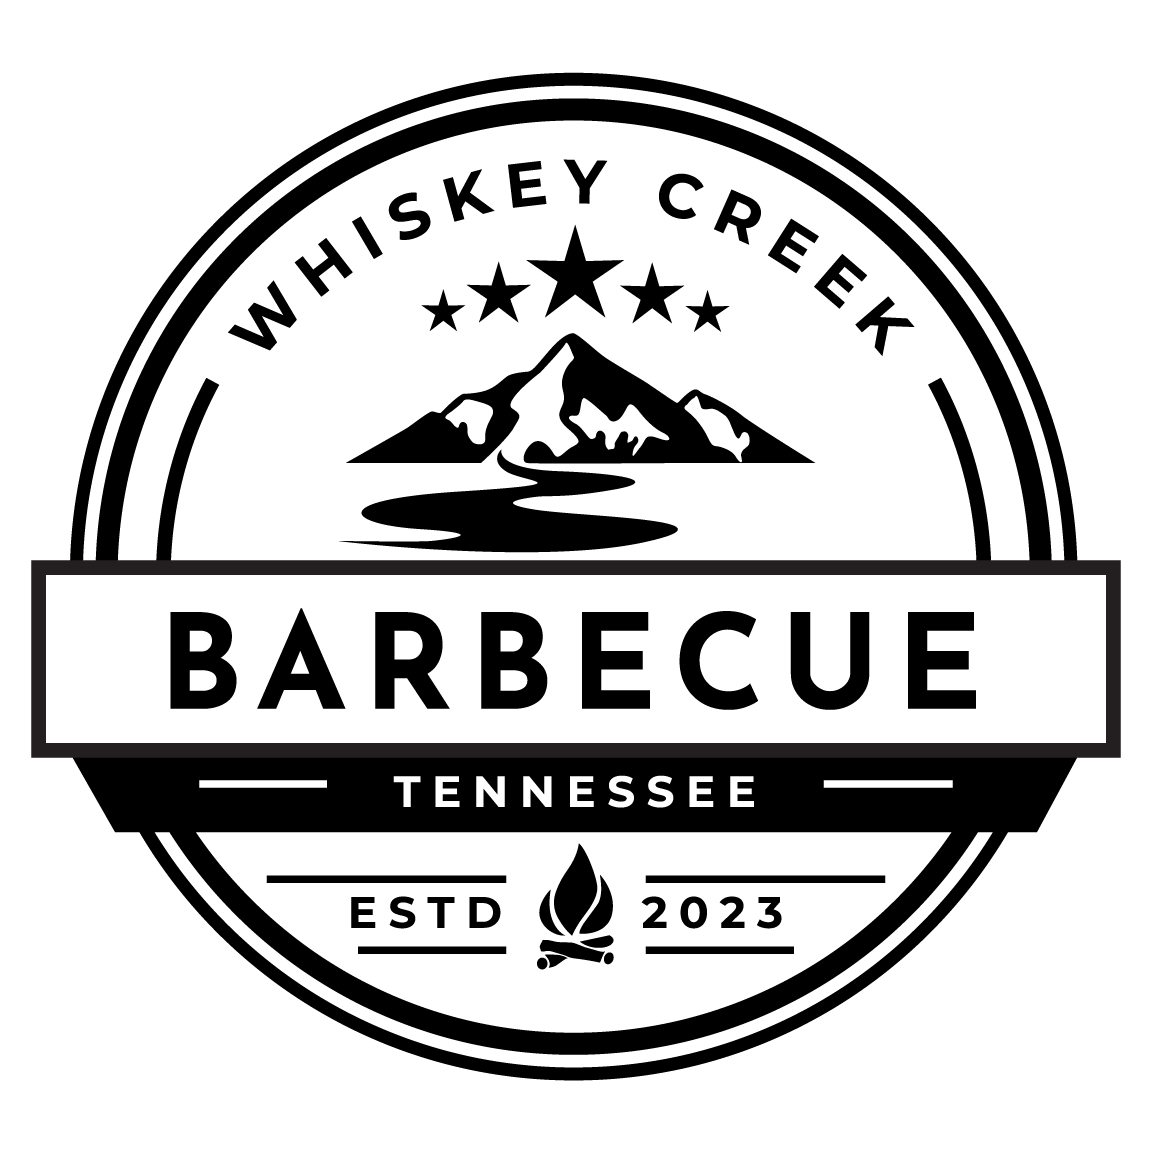 Whiskey Creek BBQ